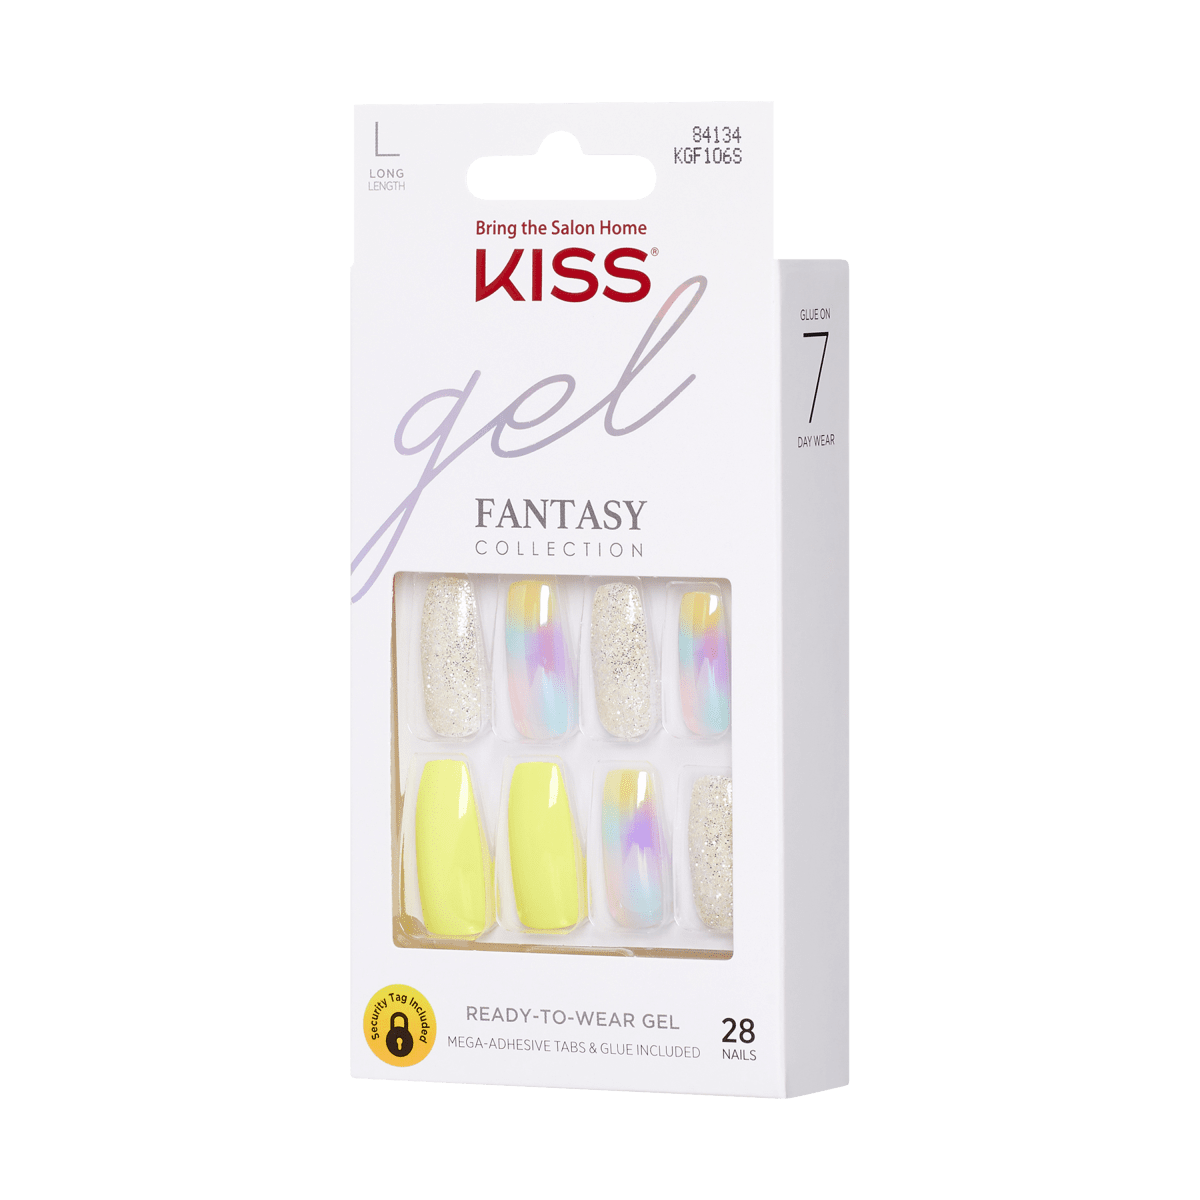 KISS Gel Fantasy Ready to Wear Gel Nails - In Your Eyes